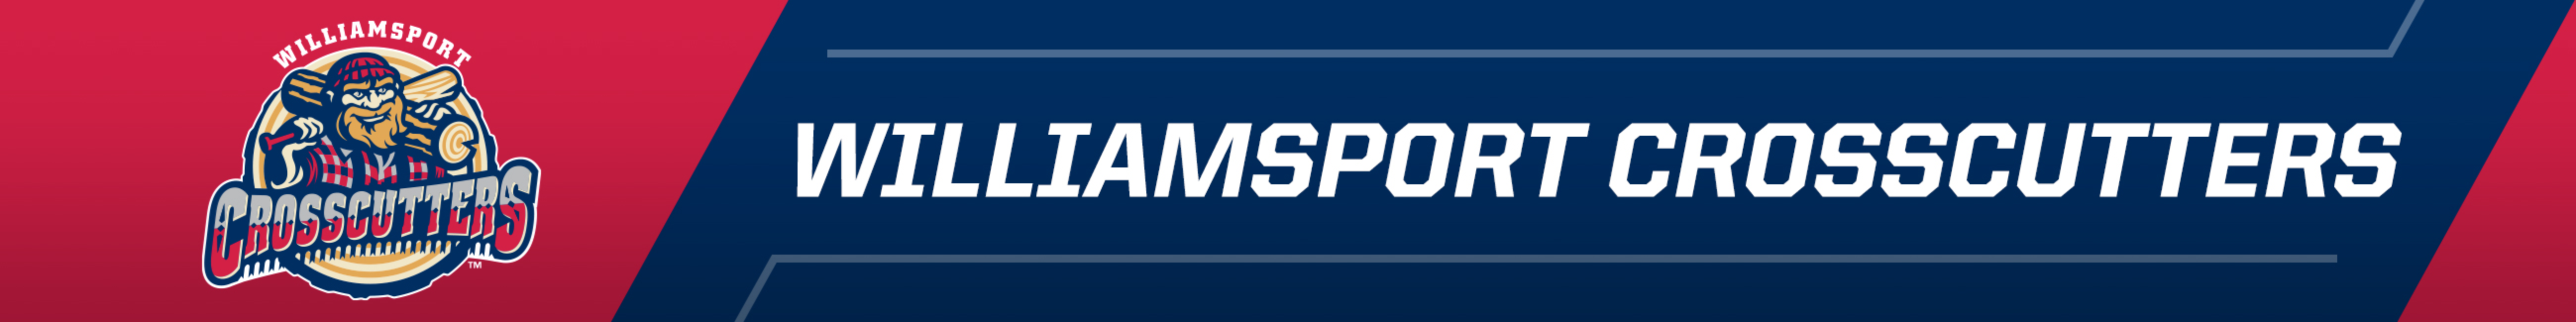 williamsport crosscutters-image